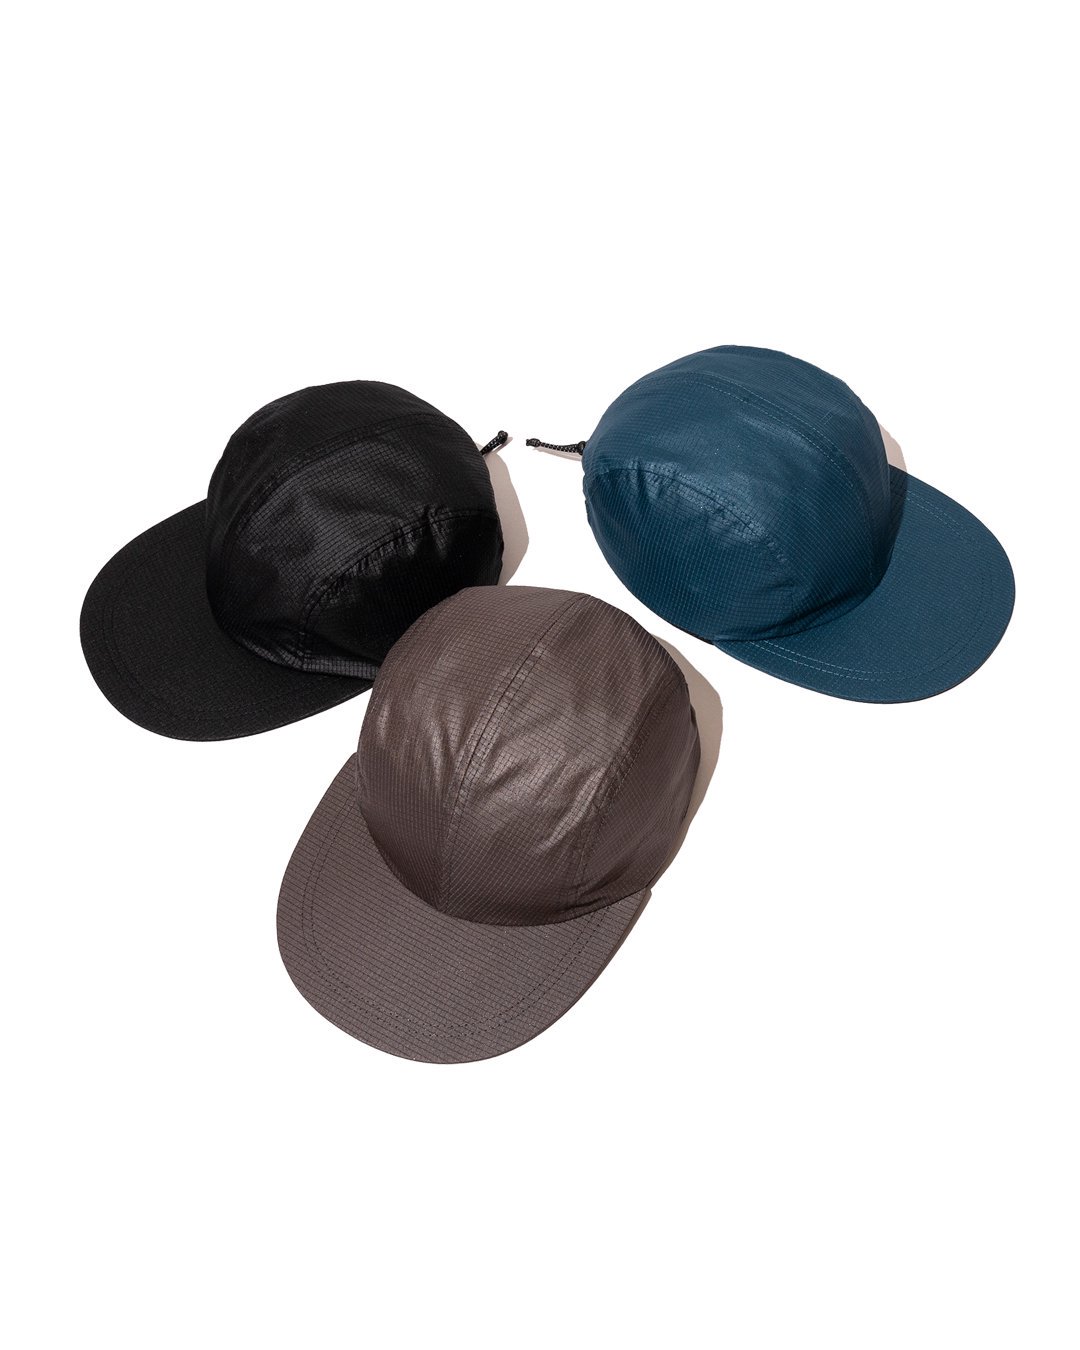 DMTN WAX CAP - Brown, Black, Steel